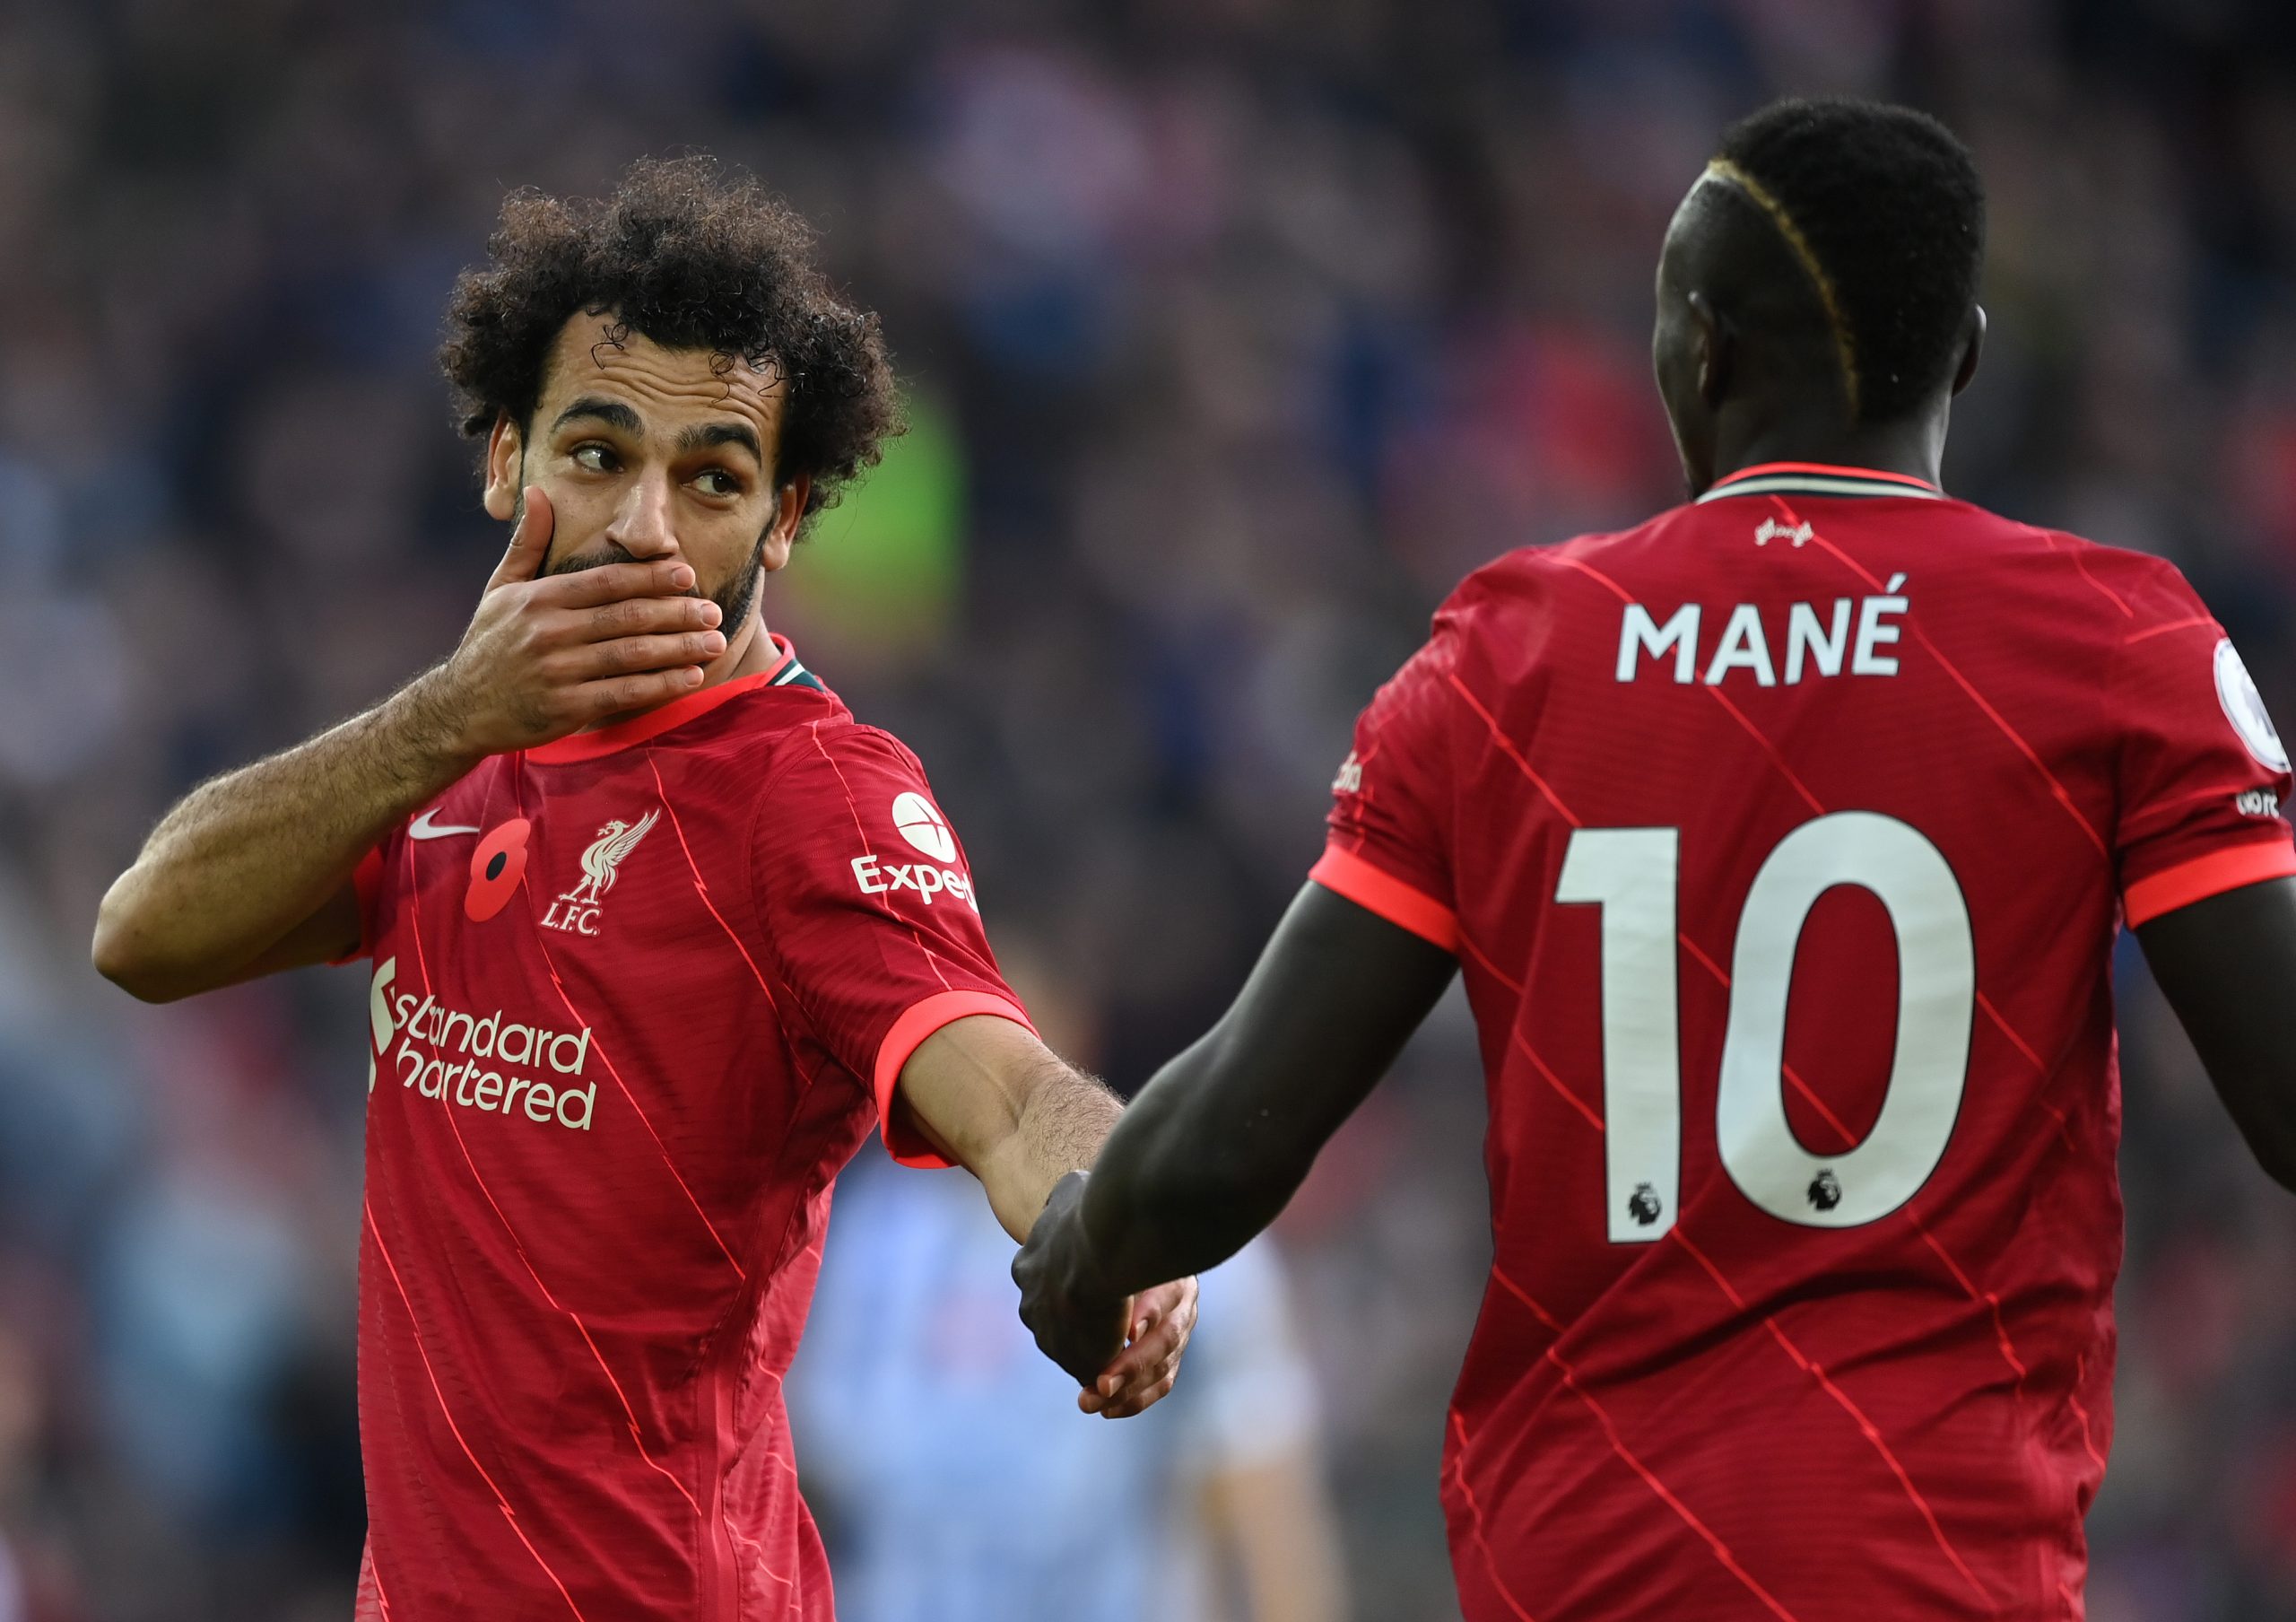 Liverpool (Salah and Mane)